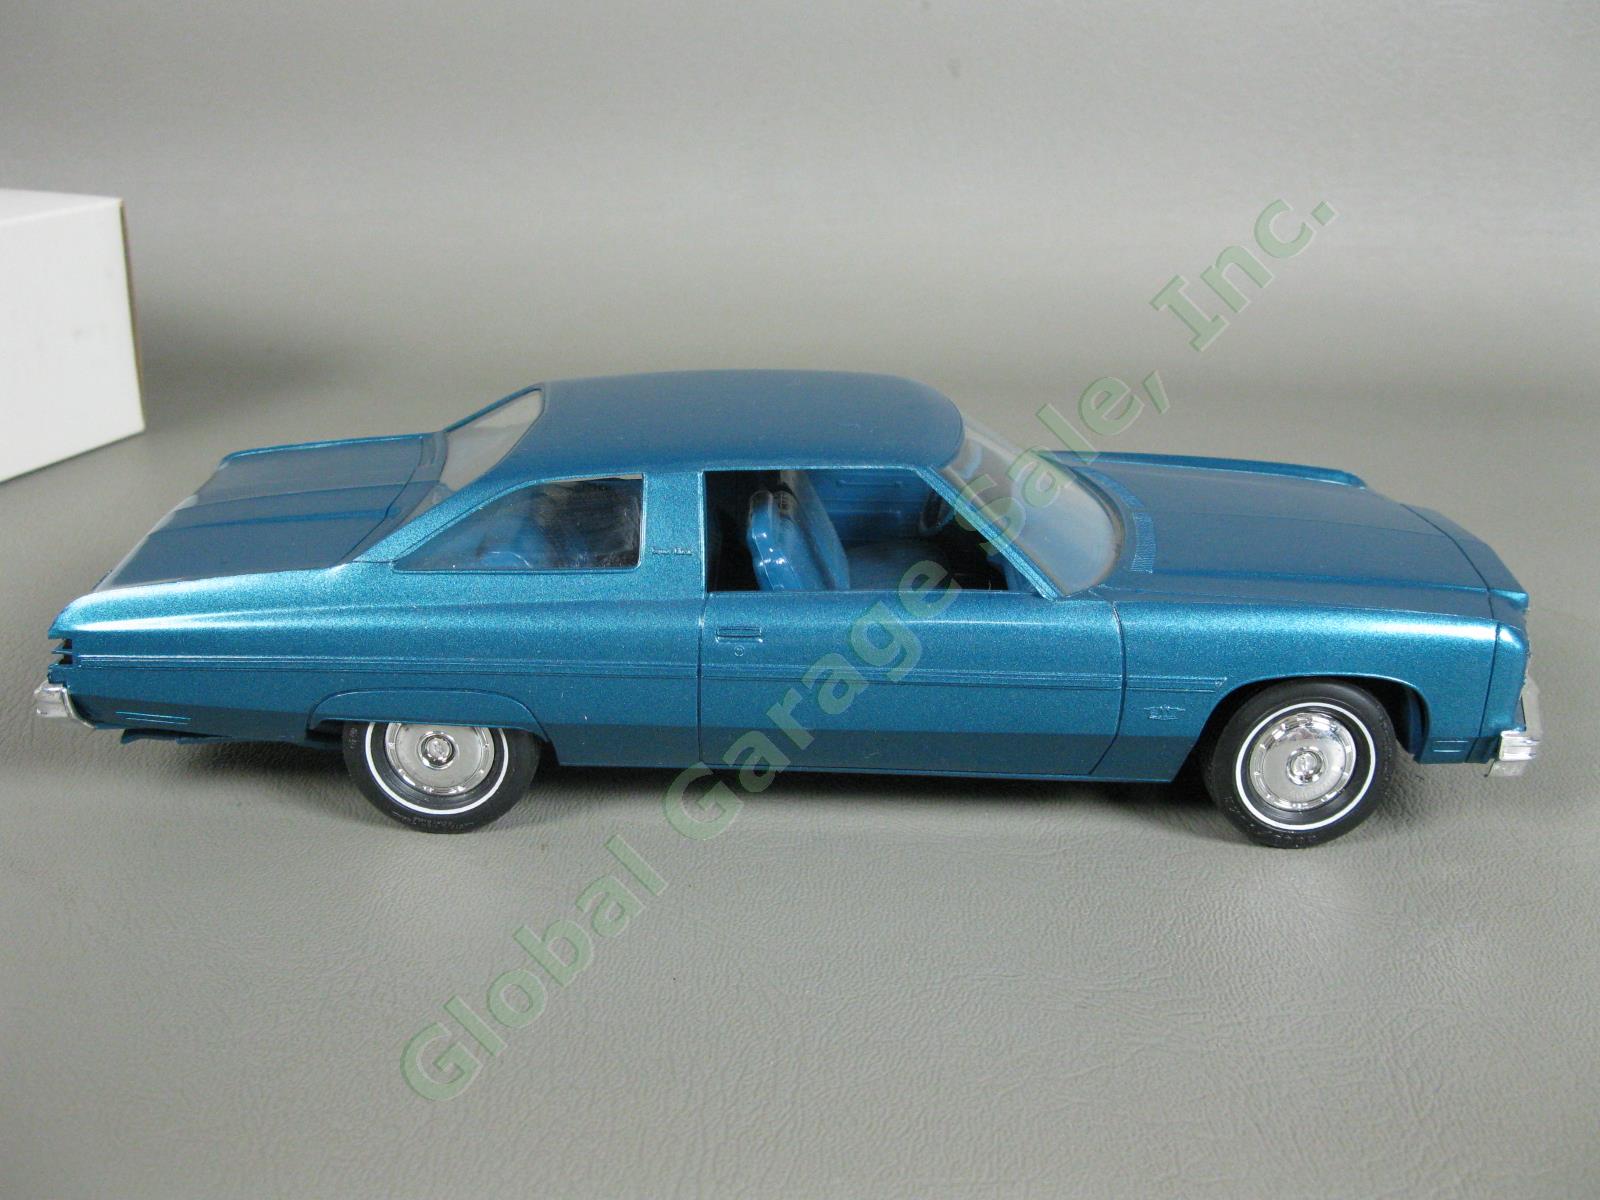 Original VTG 1975 Chevrolet Caprice Classic Blue Plastic Dealer Promo Model Car 3